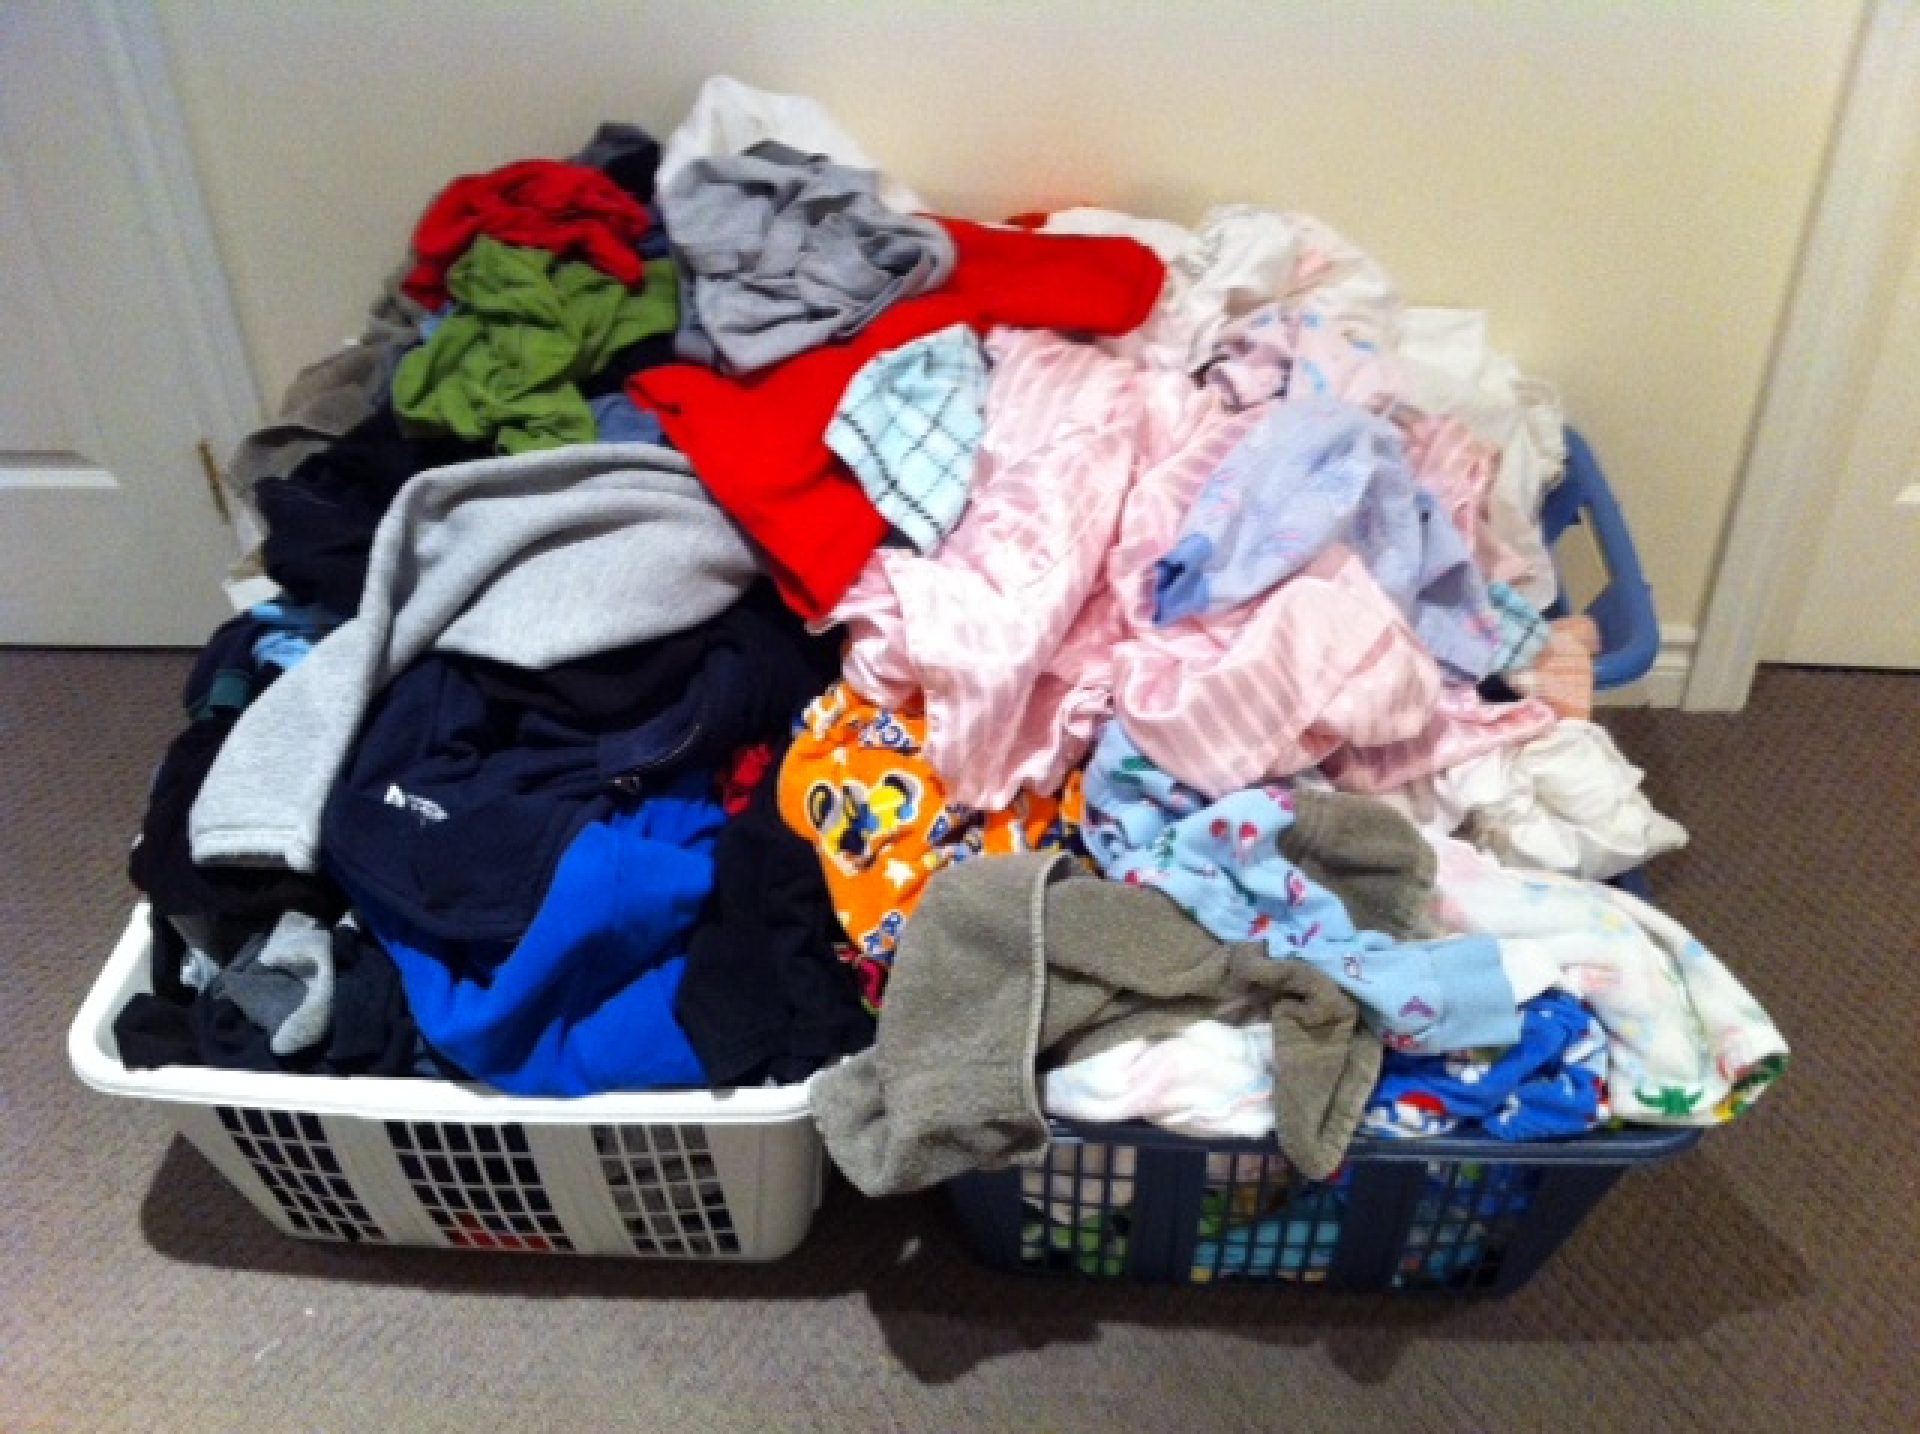 Laundry!